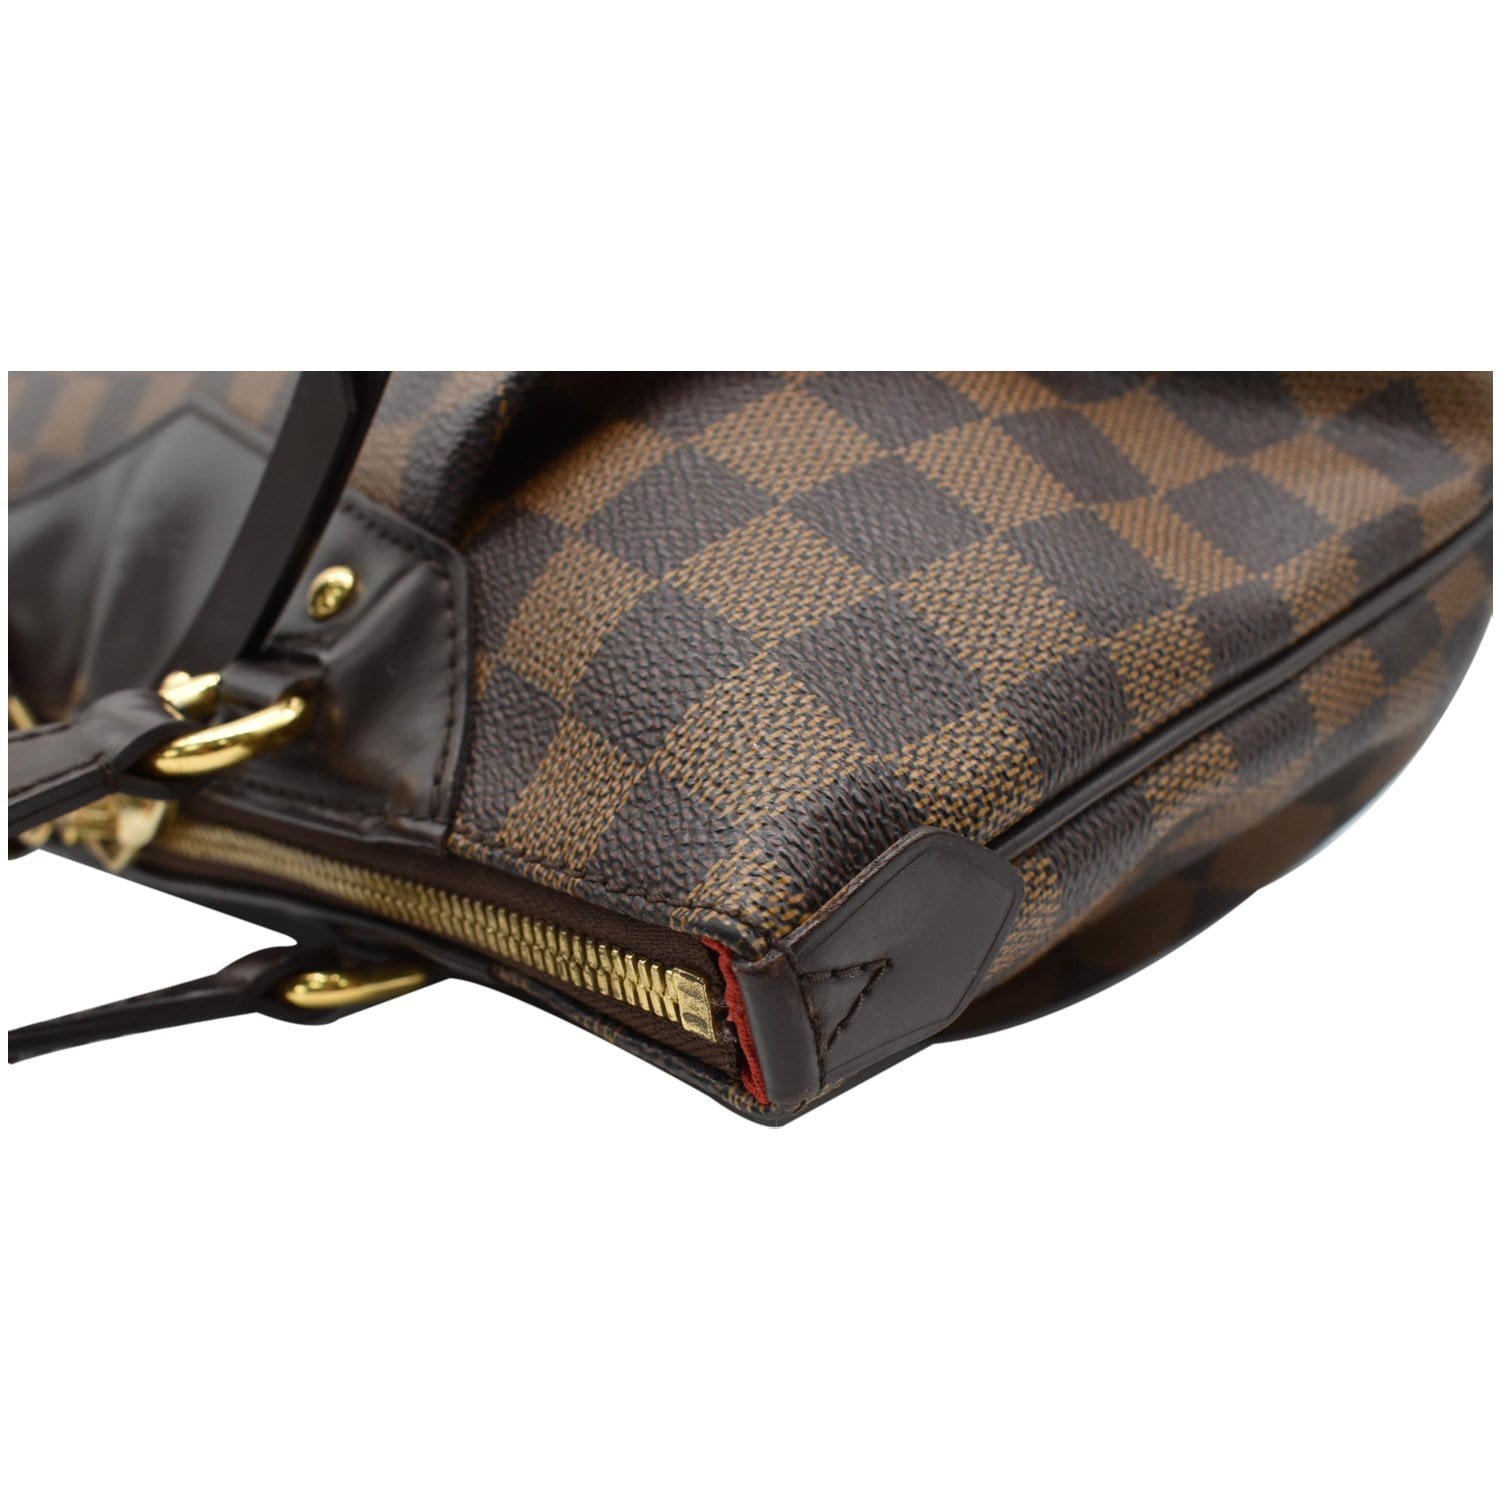 Louis Vuitton Damier Ebene Westminster PM - Brown Totes, Handbags